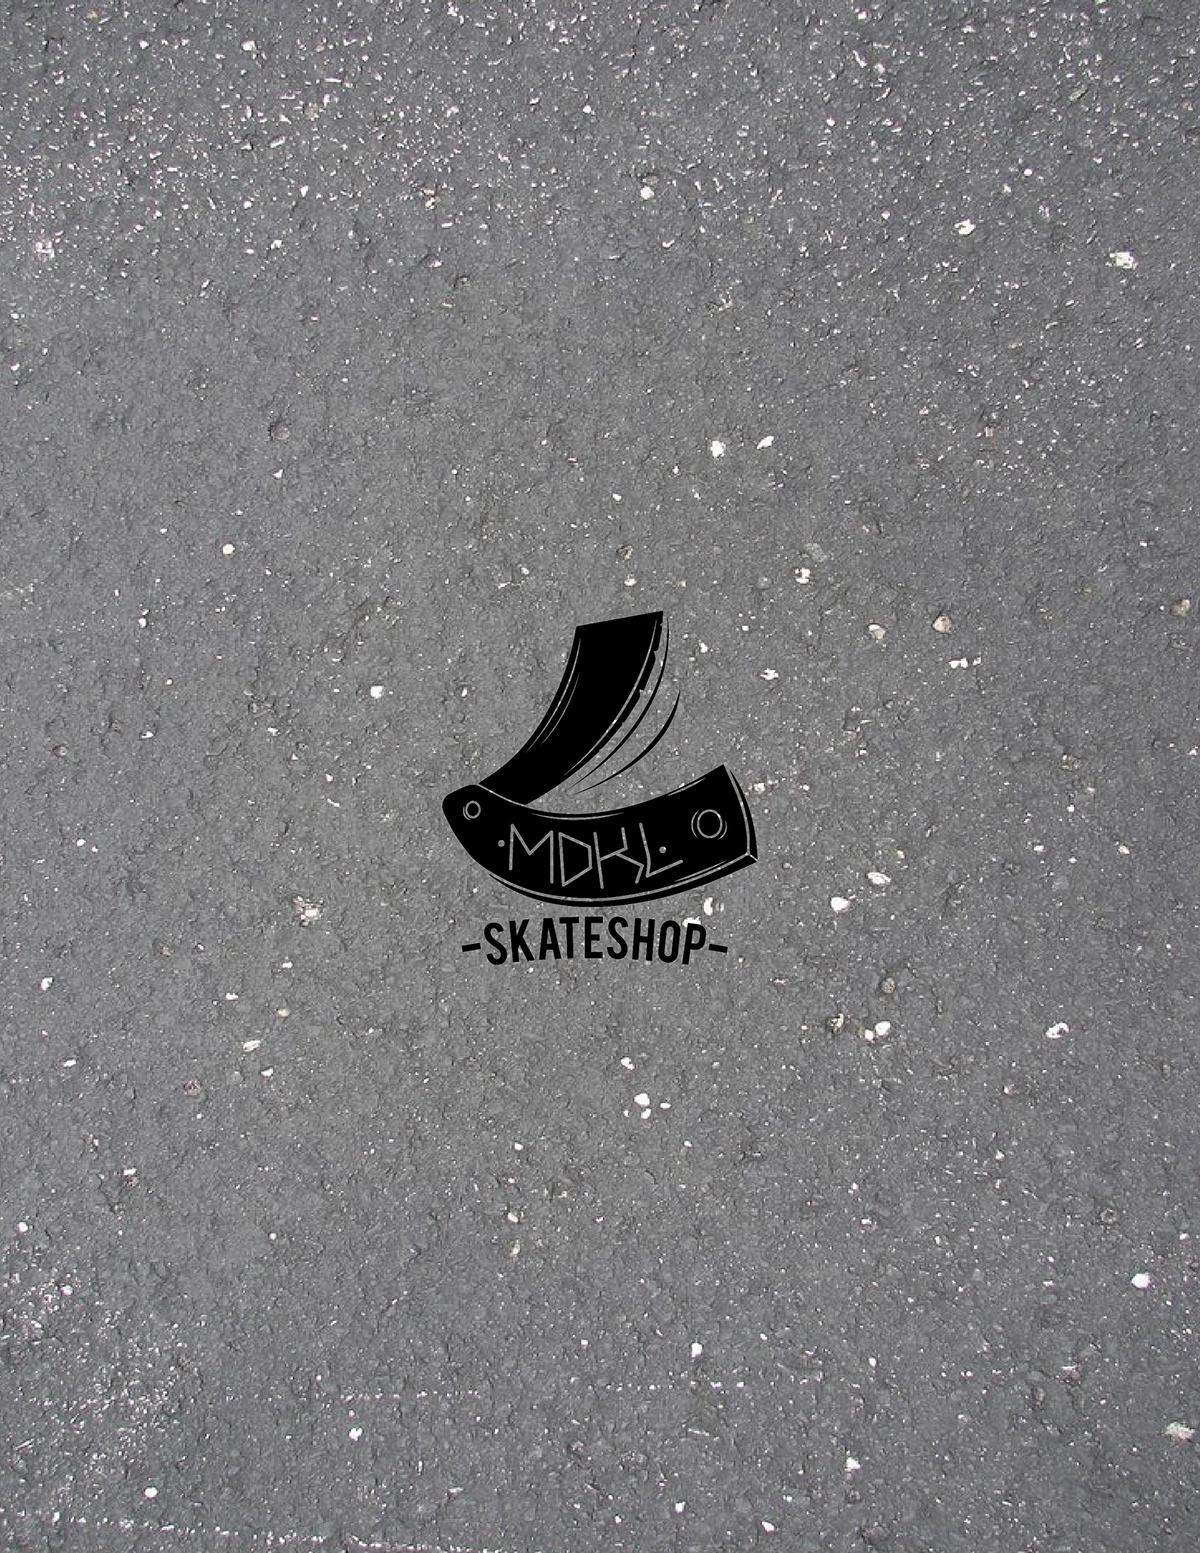 skateshop skateboarding puertovallarta design TEPATITLAN jalisco GABRIELCUEVAS ilustracion MDKL patineta skatestore skate skatebrand streetbrand OCAAA